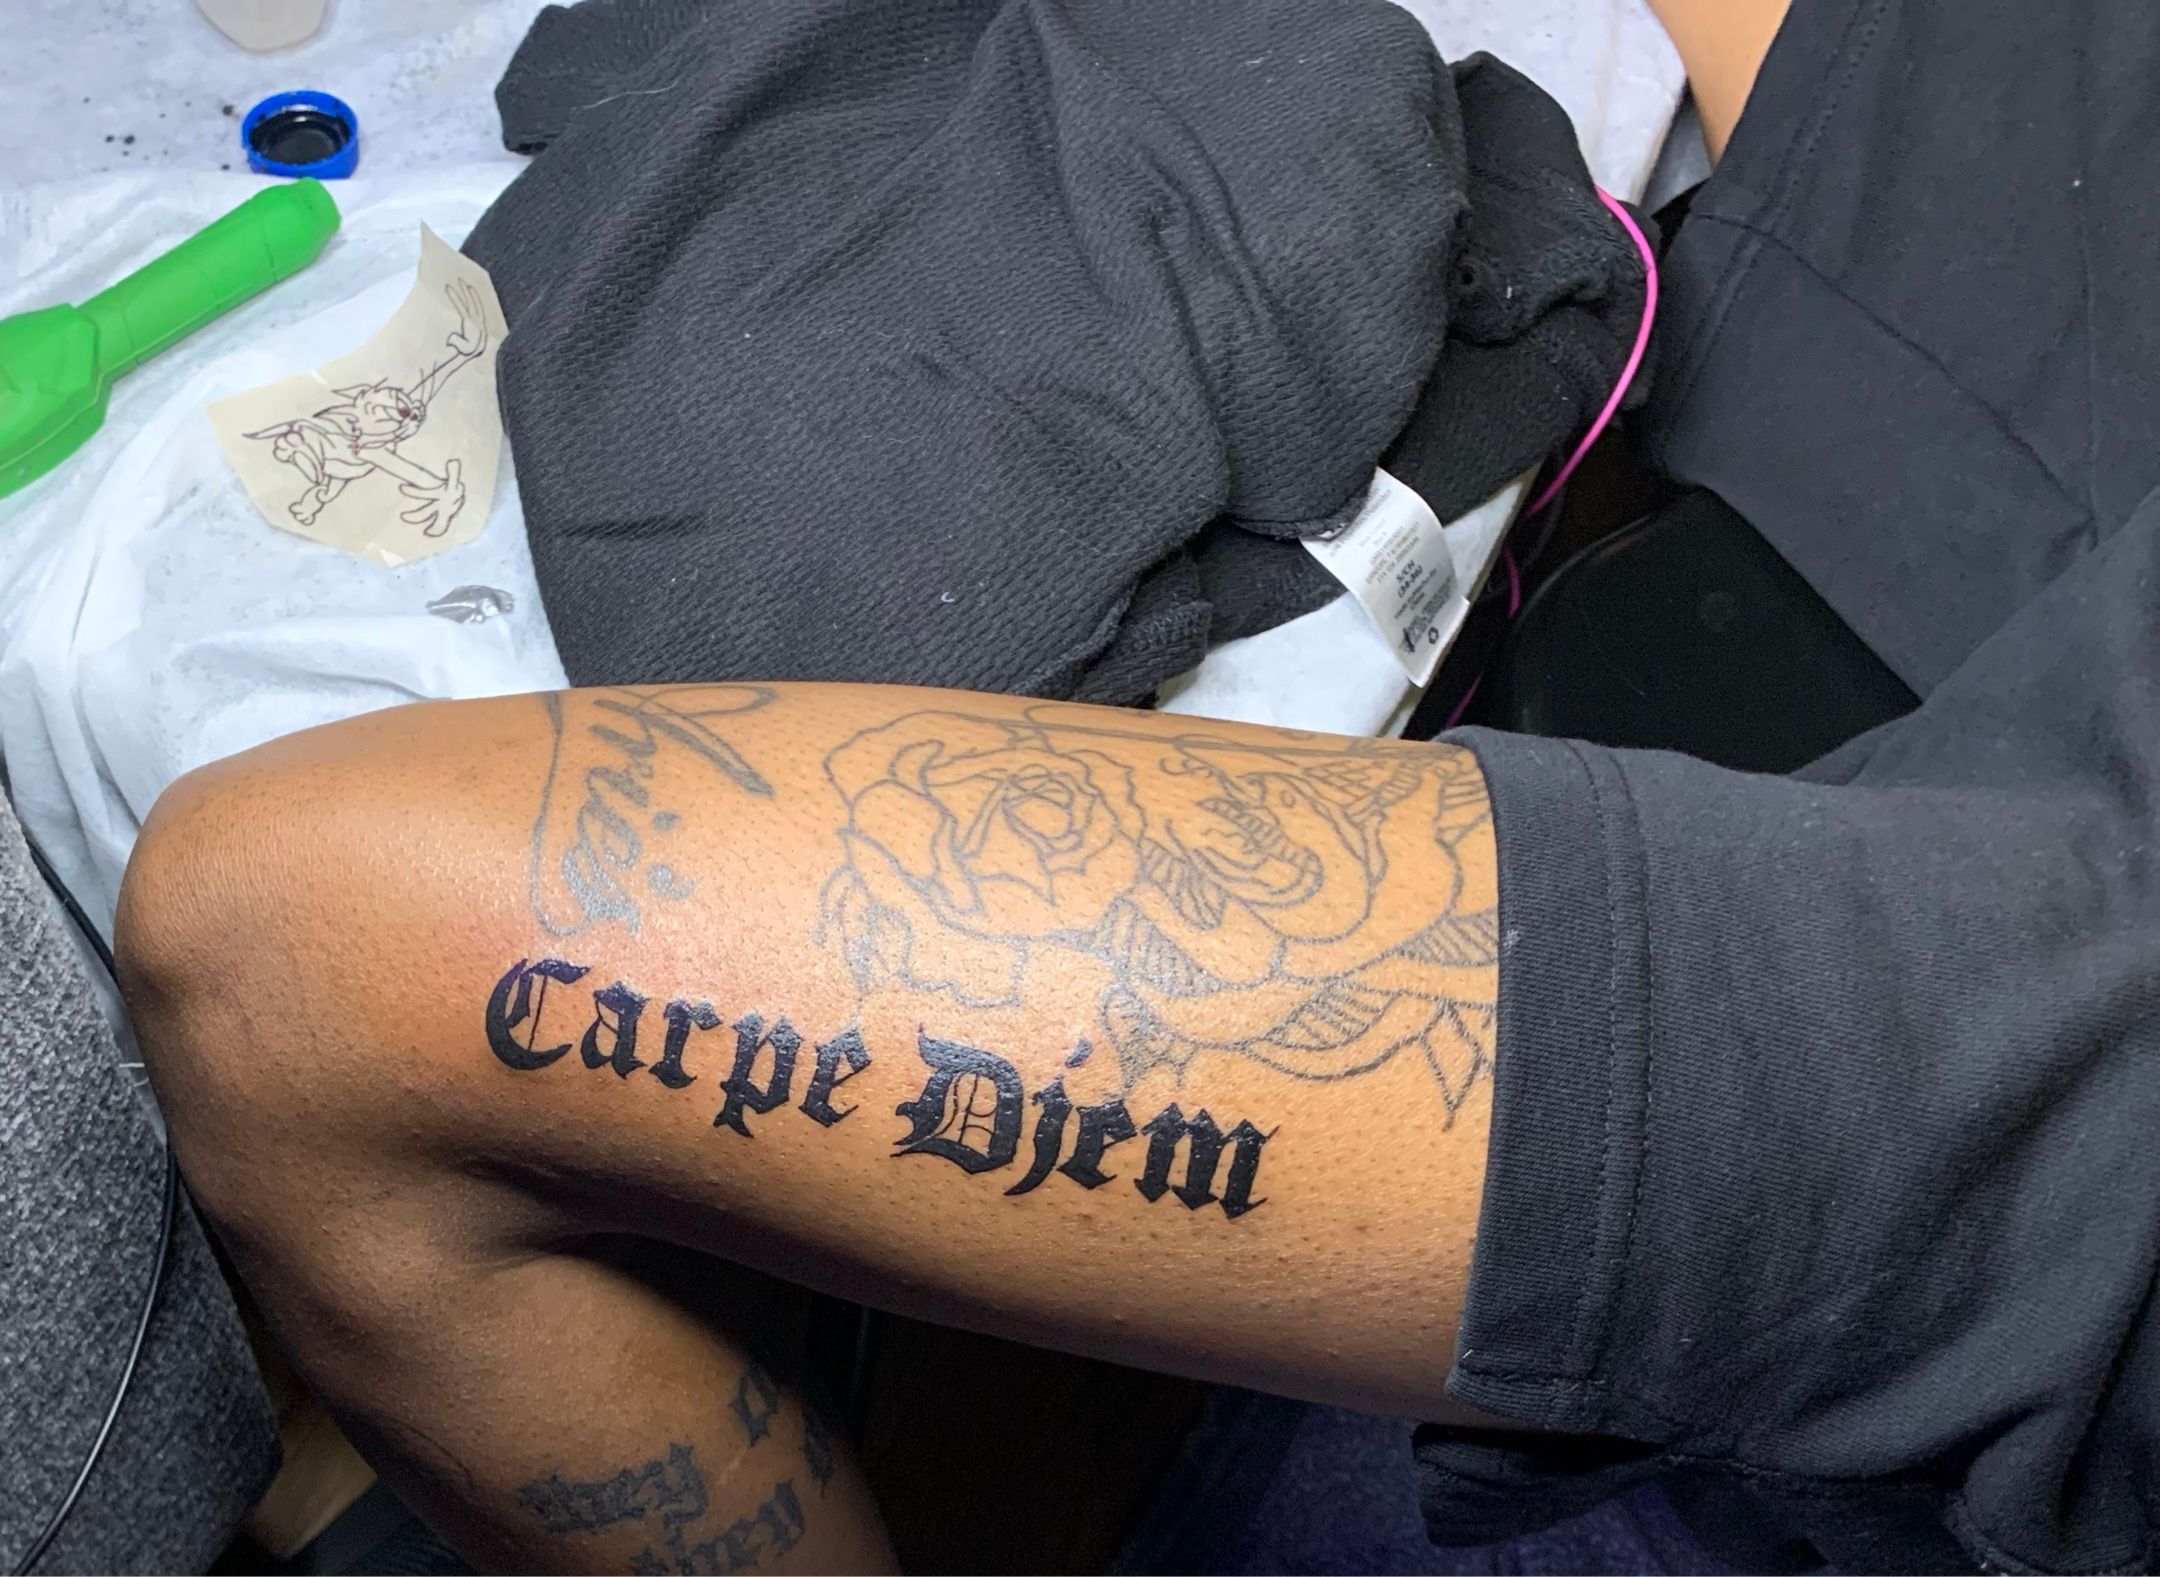 Tattoo Studio In Jaipur - Carpe Diem Text Tattoo Done By Xpose Tattoo  Jaipur. - YouTube